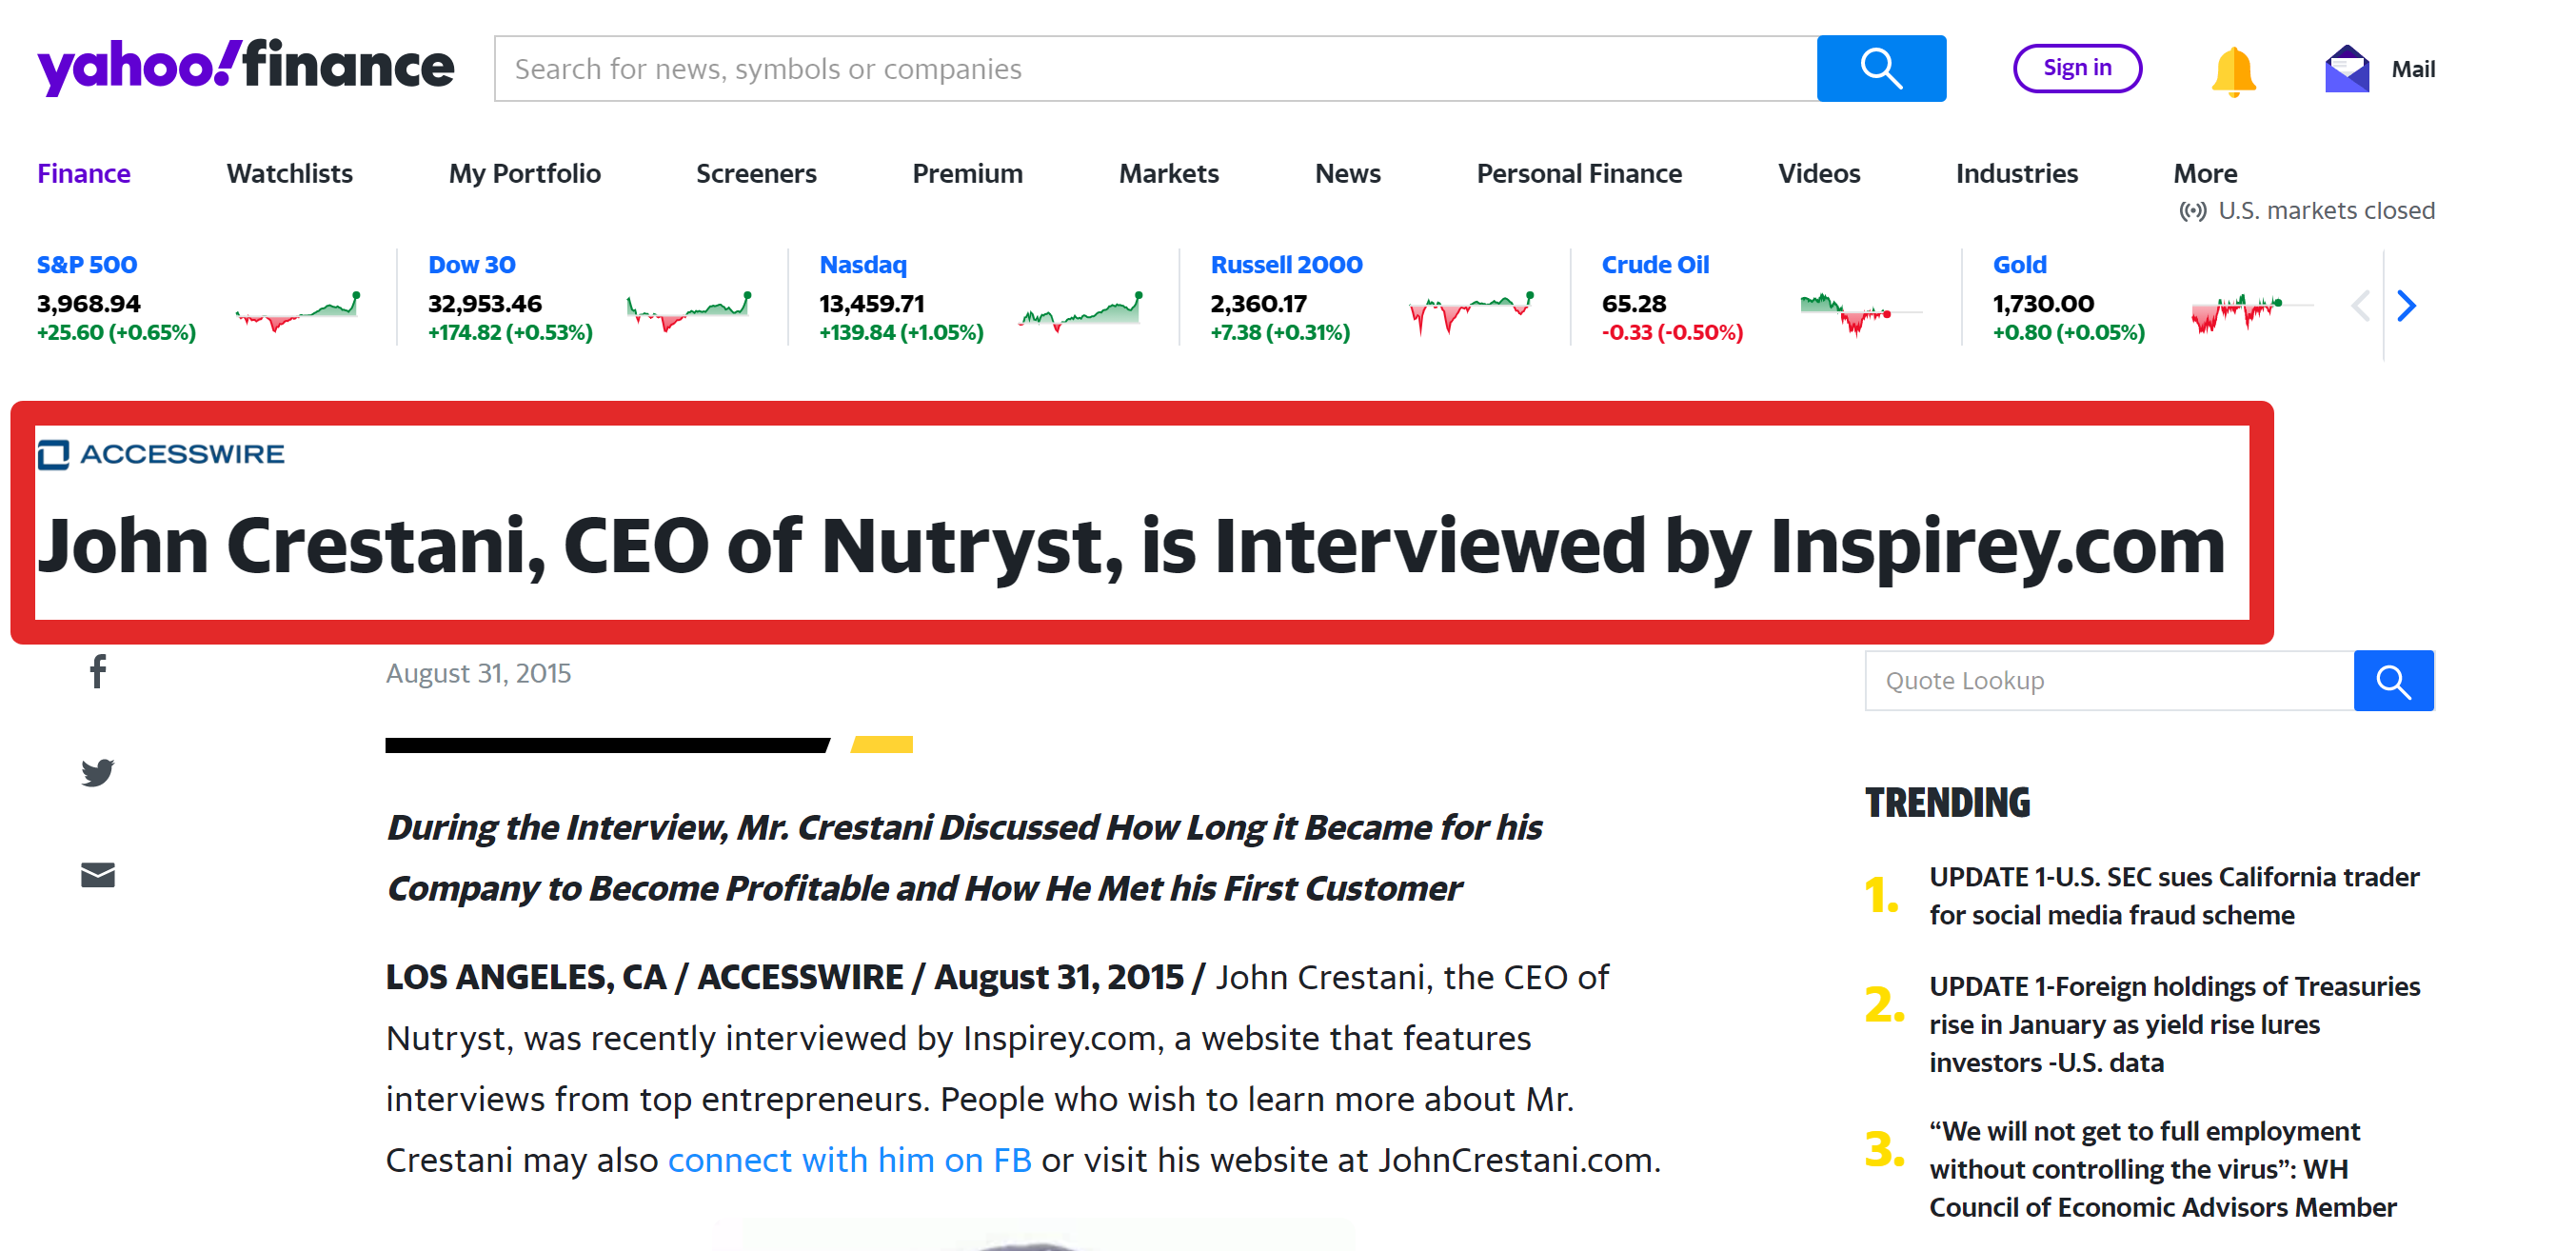 John Crestani CEO of Nutryst